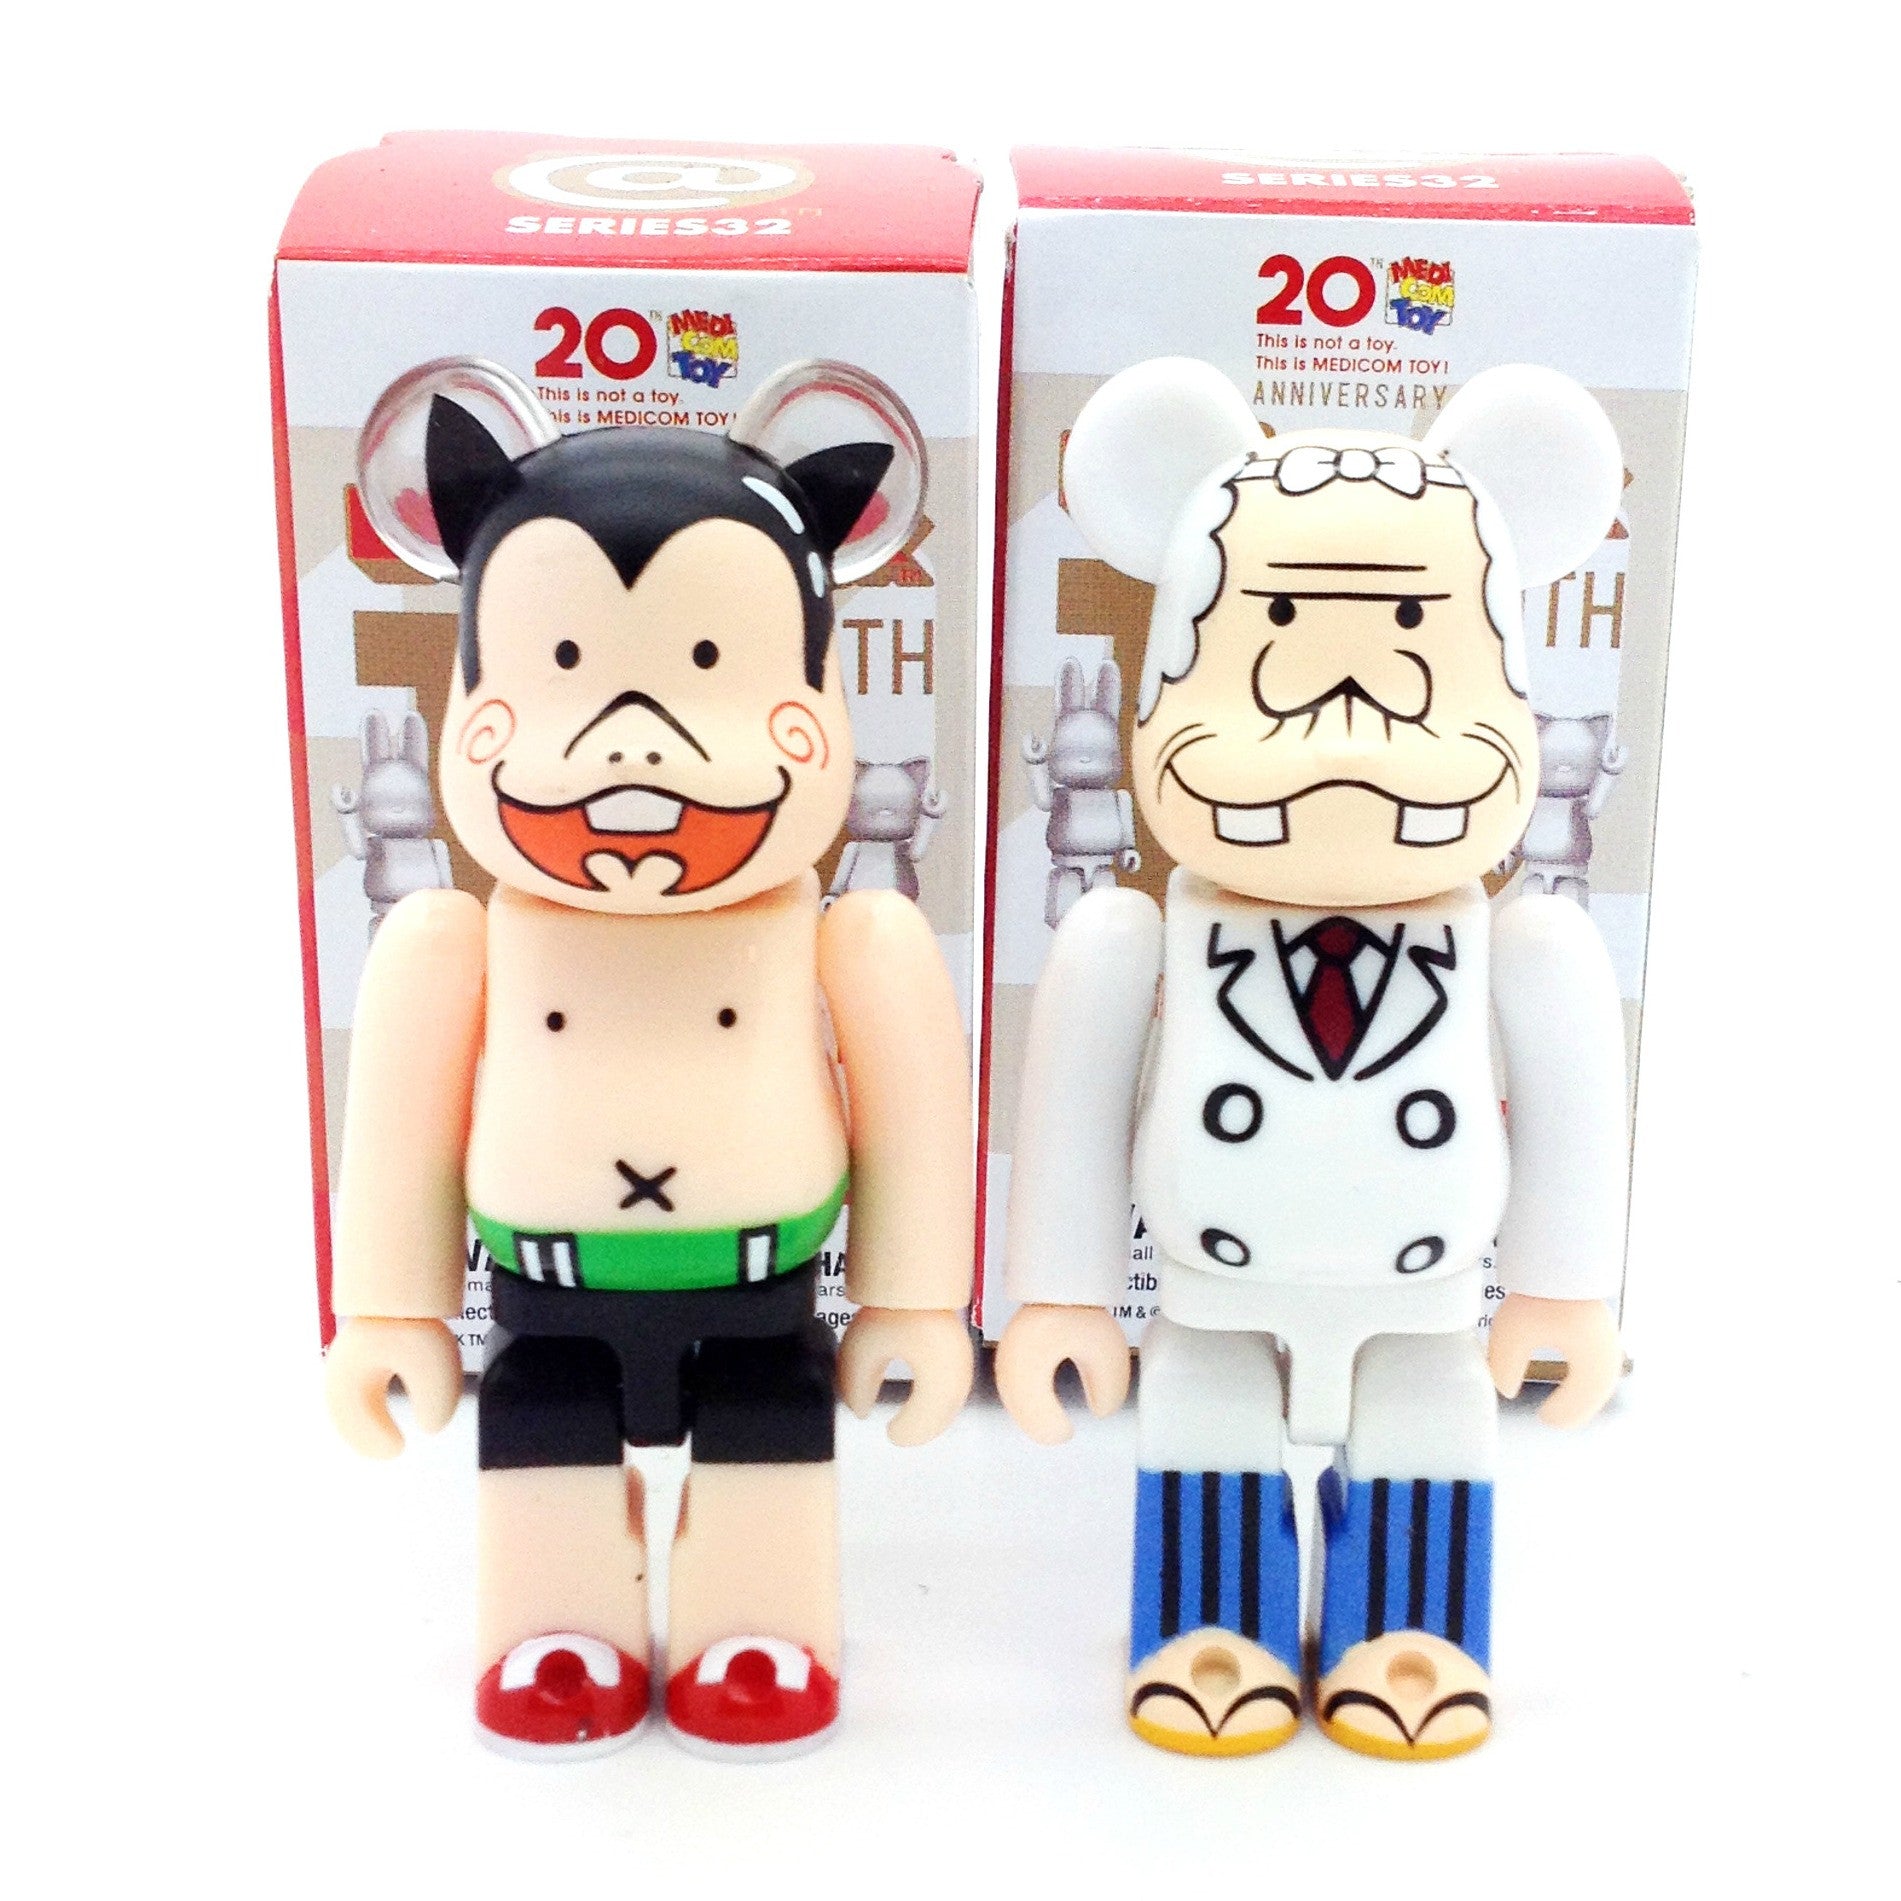 Bearbrick Series 32 - Astro Boy and Doctor Ochanomizu (Artist) (Set of 2)